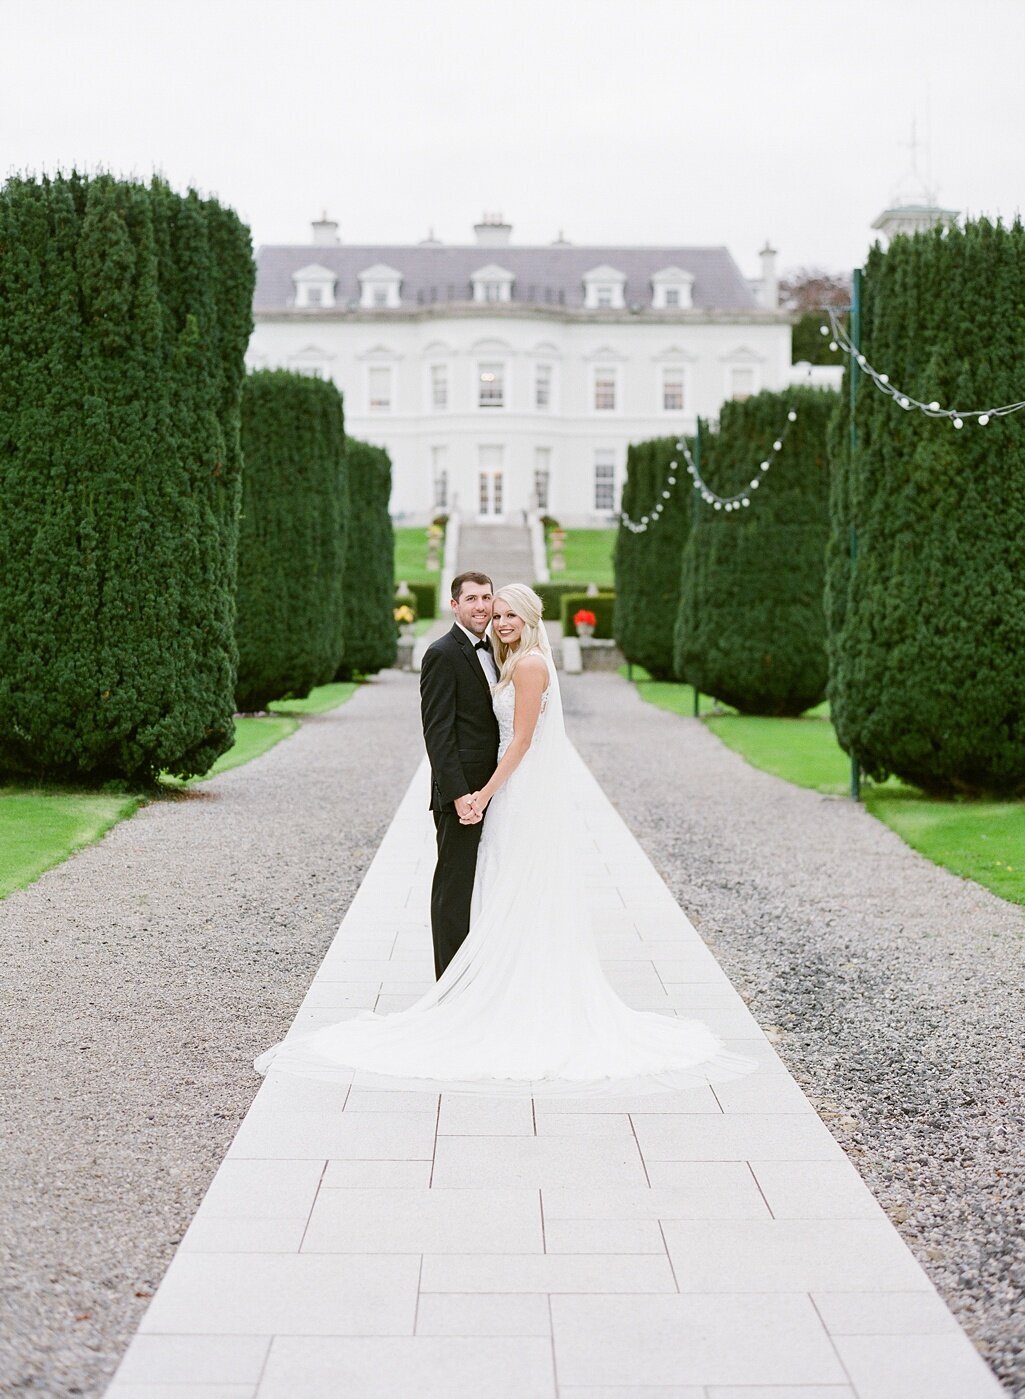 Jessie-Barksdale-Photography_K-Club-Ireland-Destination-Wedding-Photographer_0003